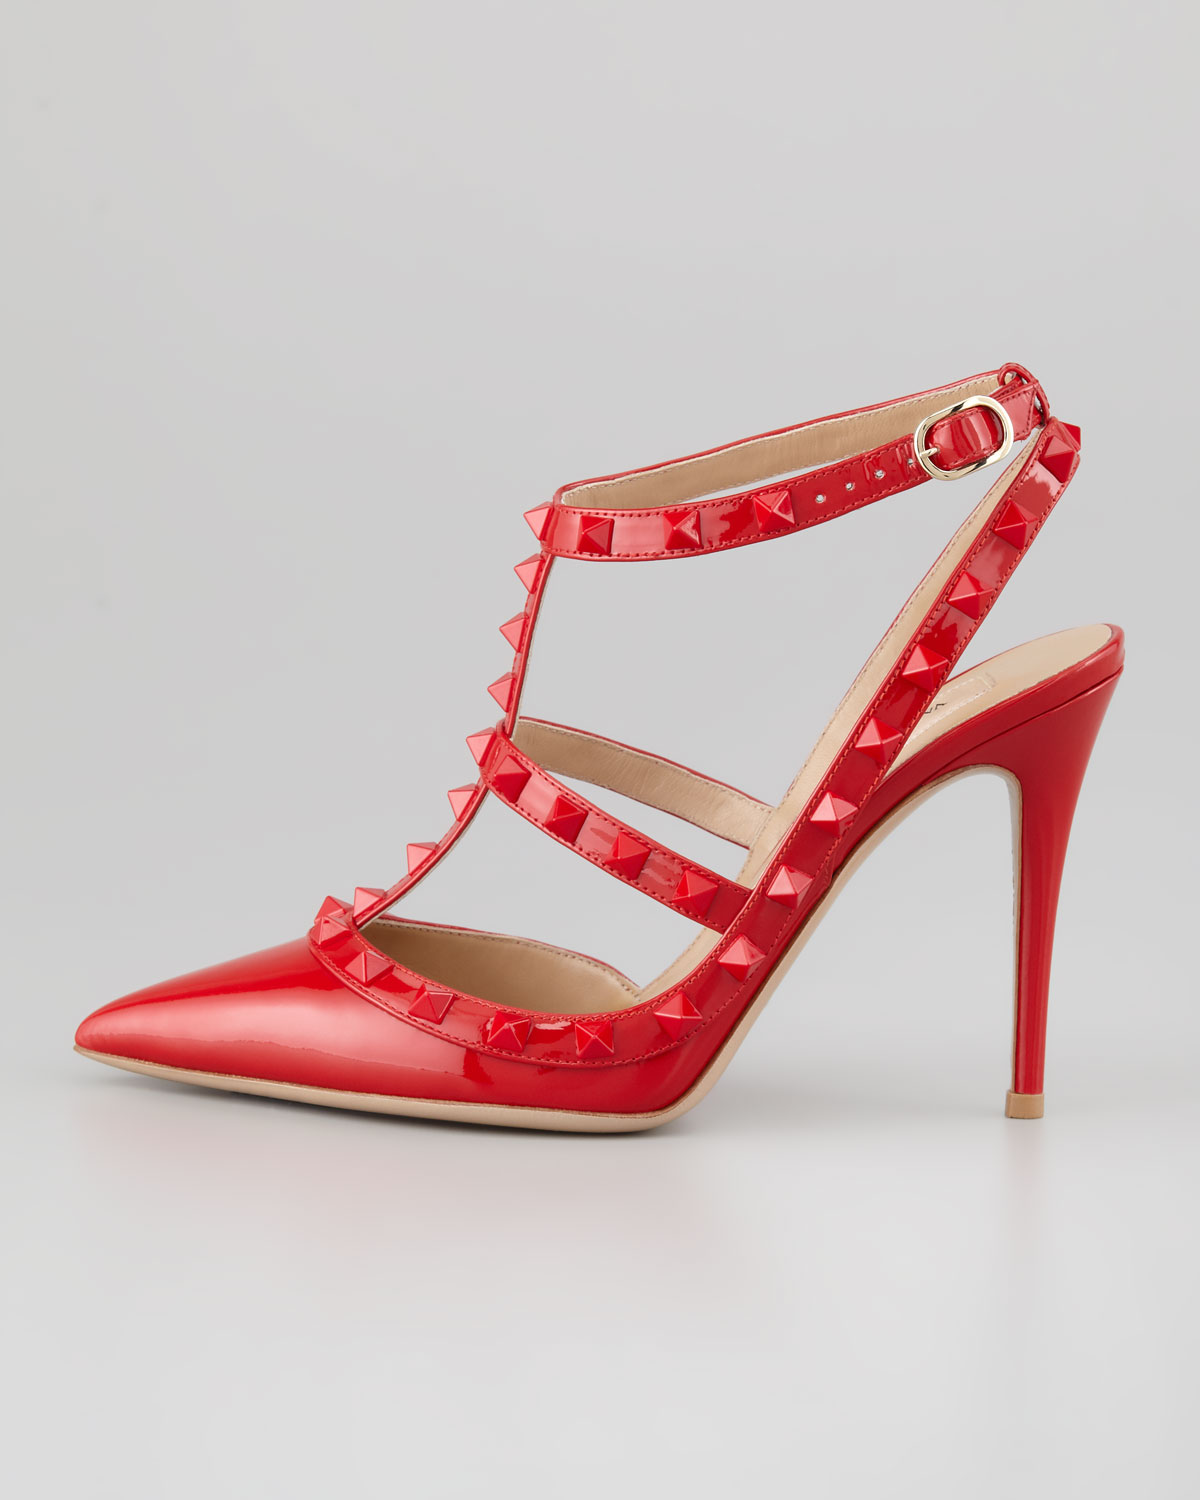 Lyst - Valentino Rockstud Patent Slingback Sandal in Red